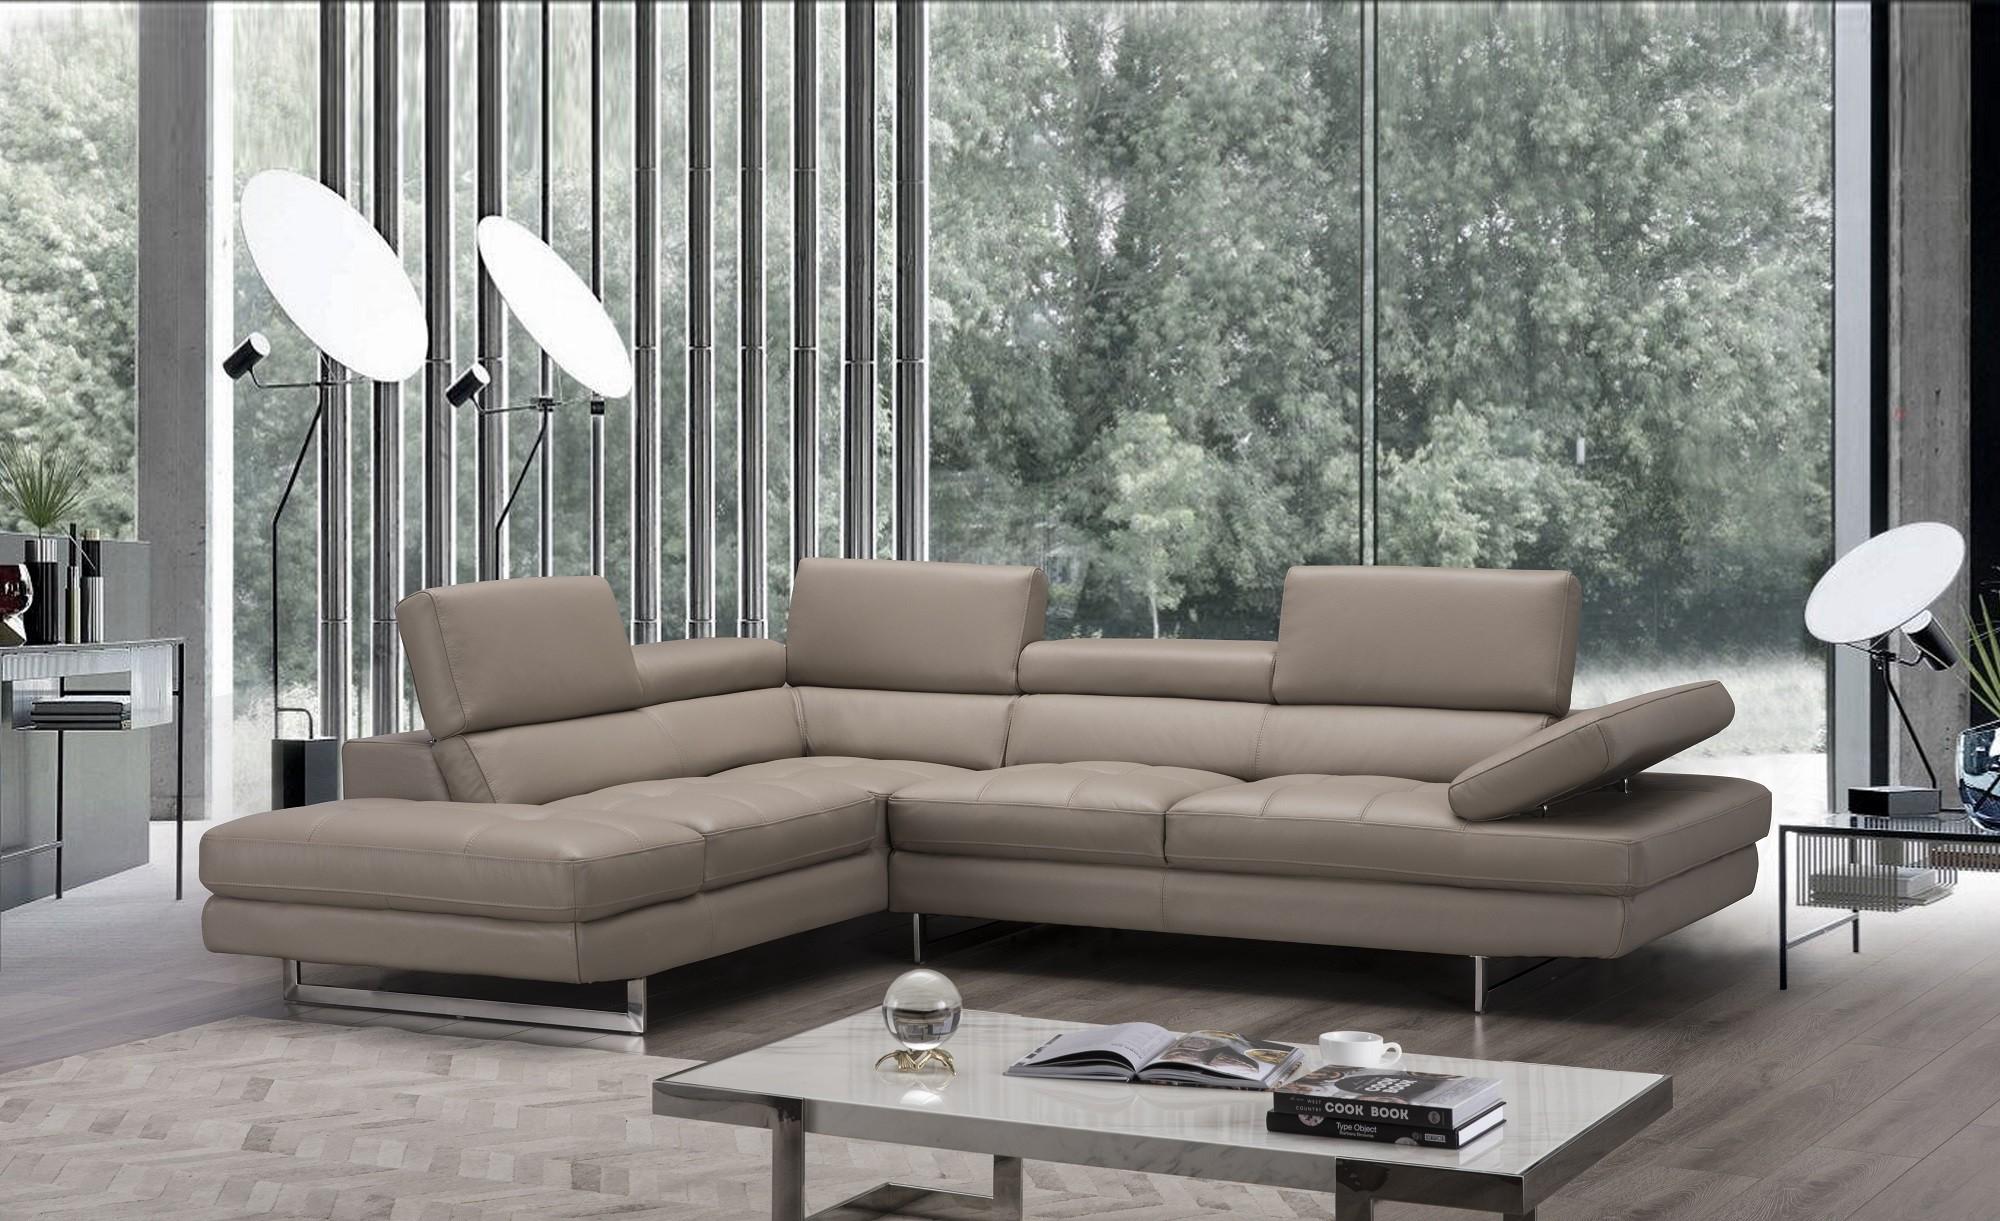 

                    
Orren Ellis Ashburton Sectional Sofa Tan/Beige Leather Purchase 
